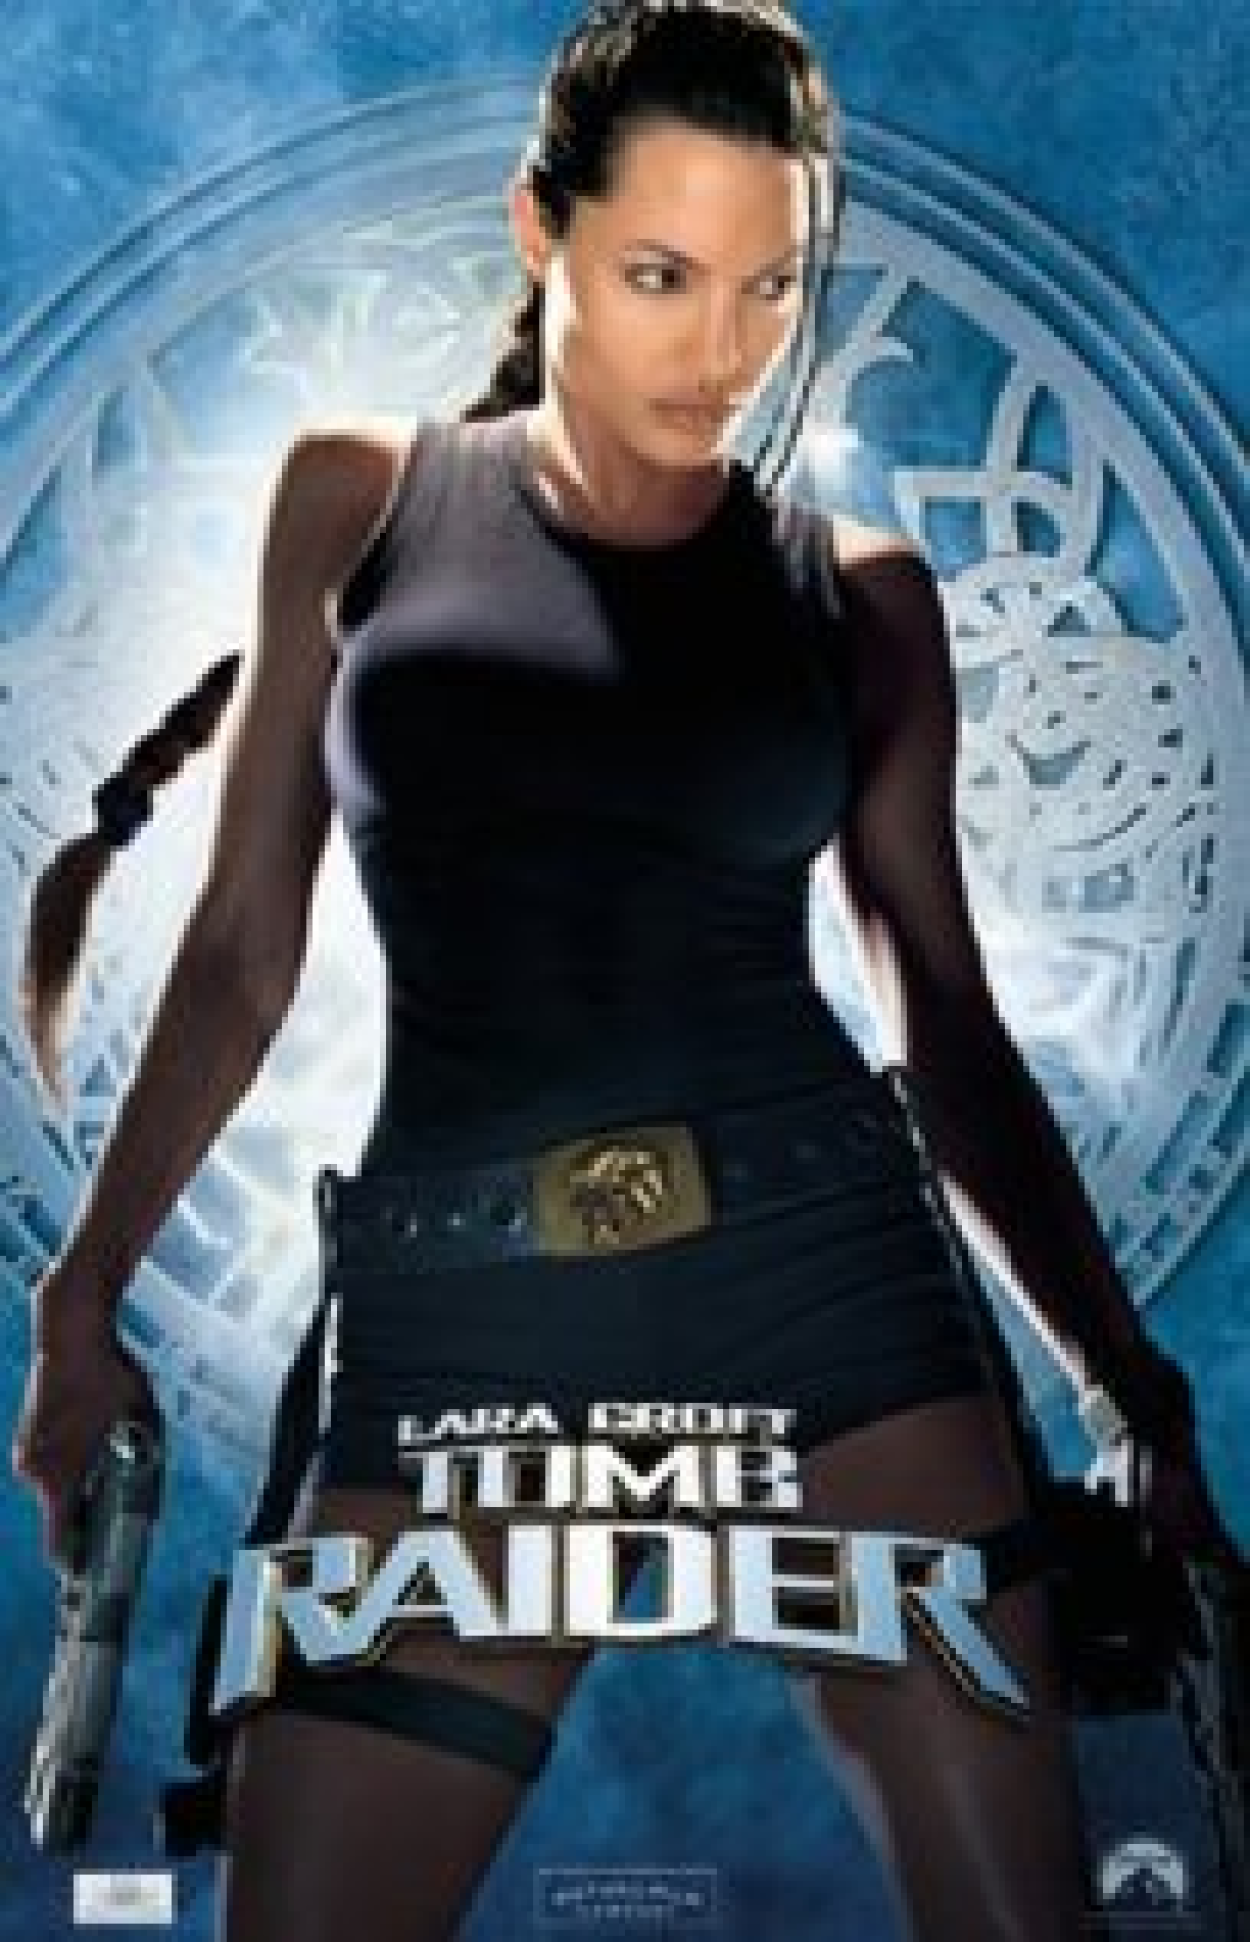 Lara Croft: Tomb Raider (Filme), Trailer, Sinopse e Curiosidades - Cinema10